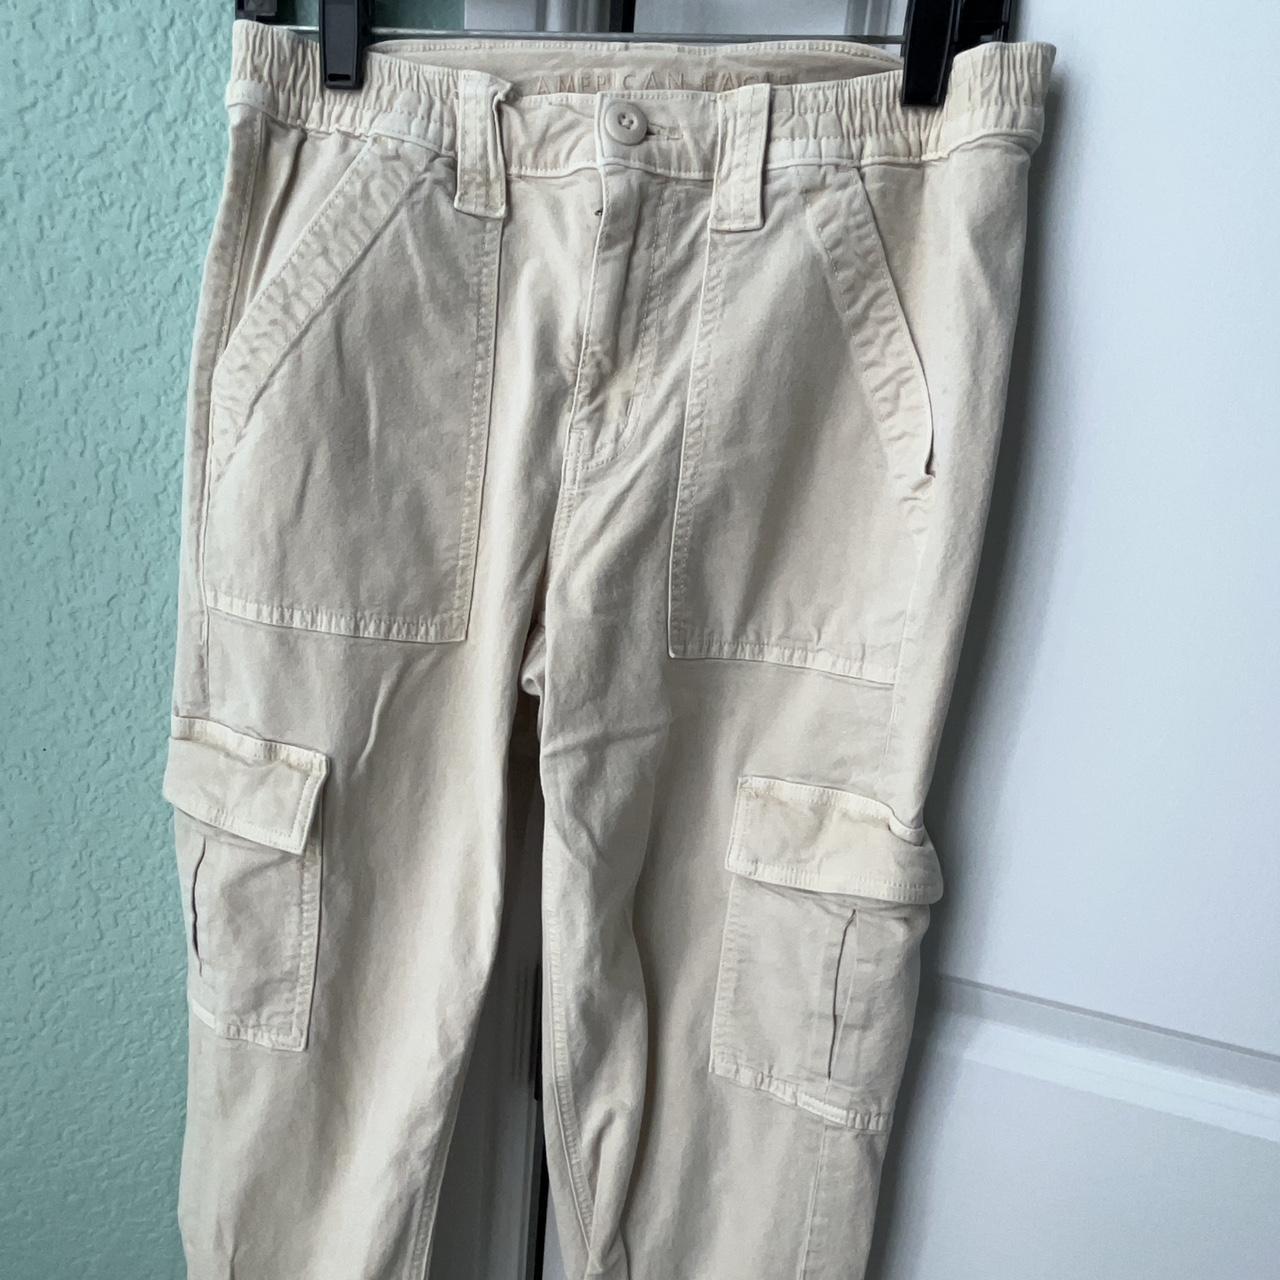 beige american eagle cargo pants, size 6, true to